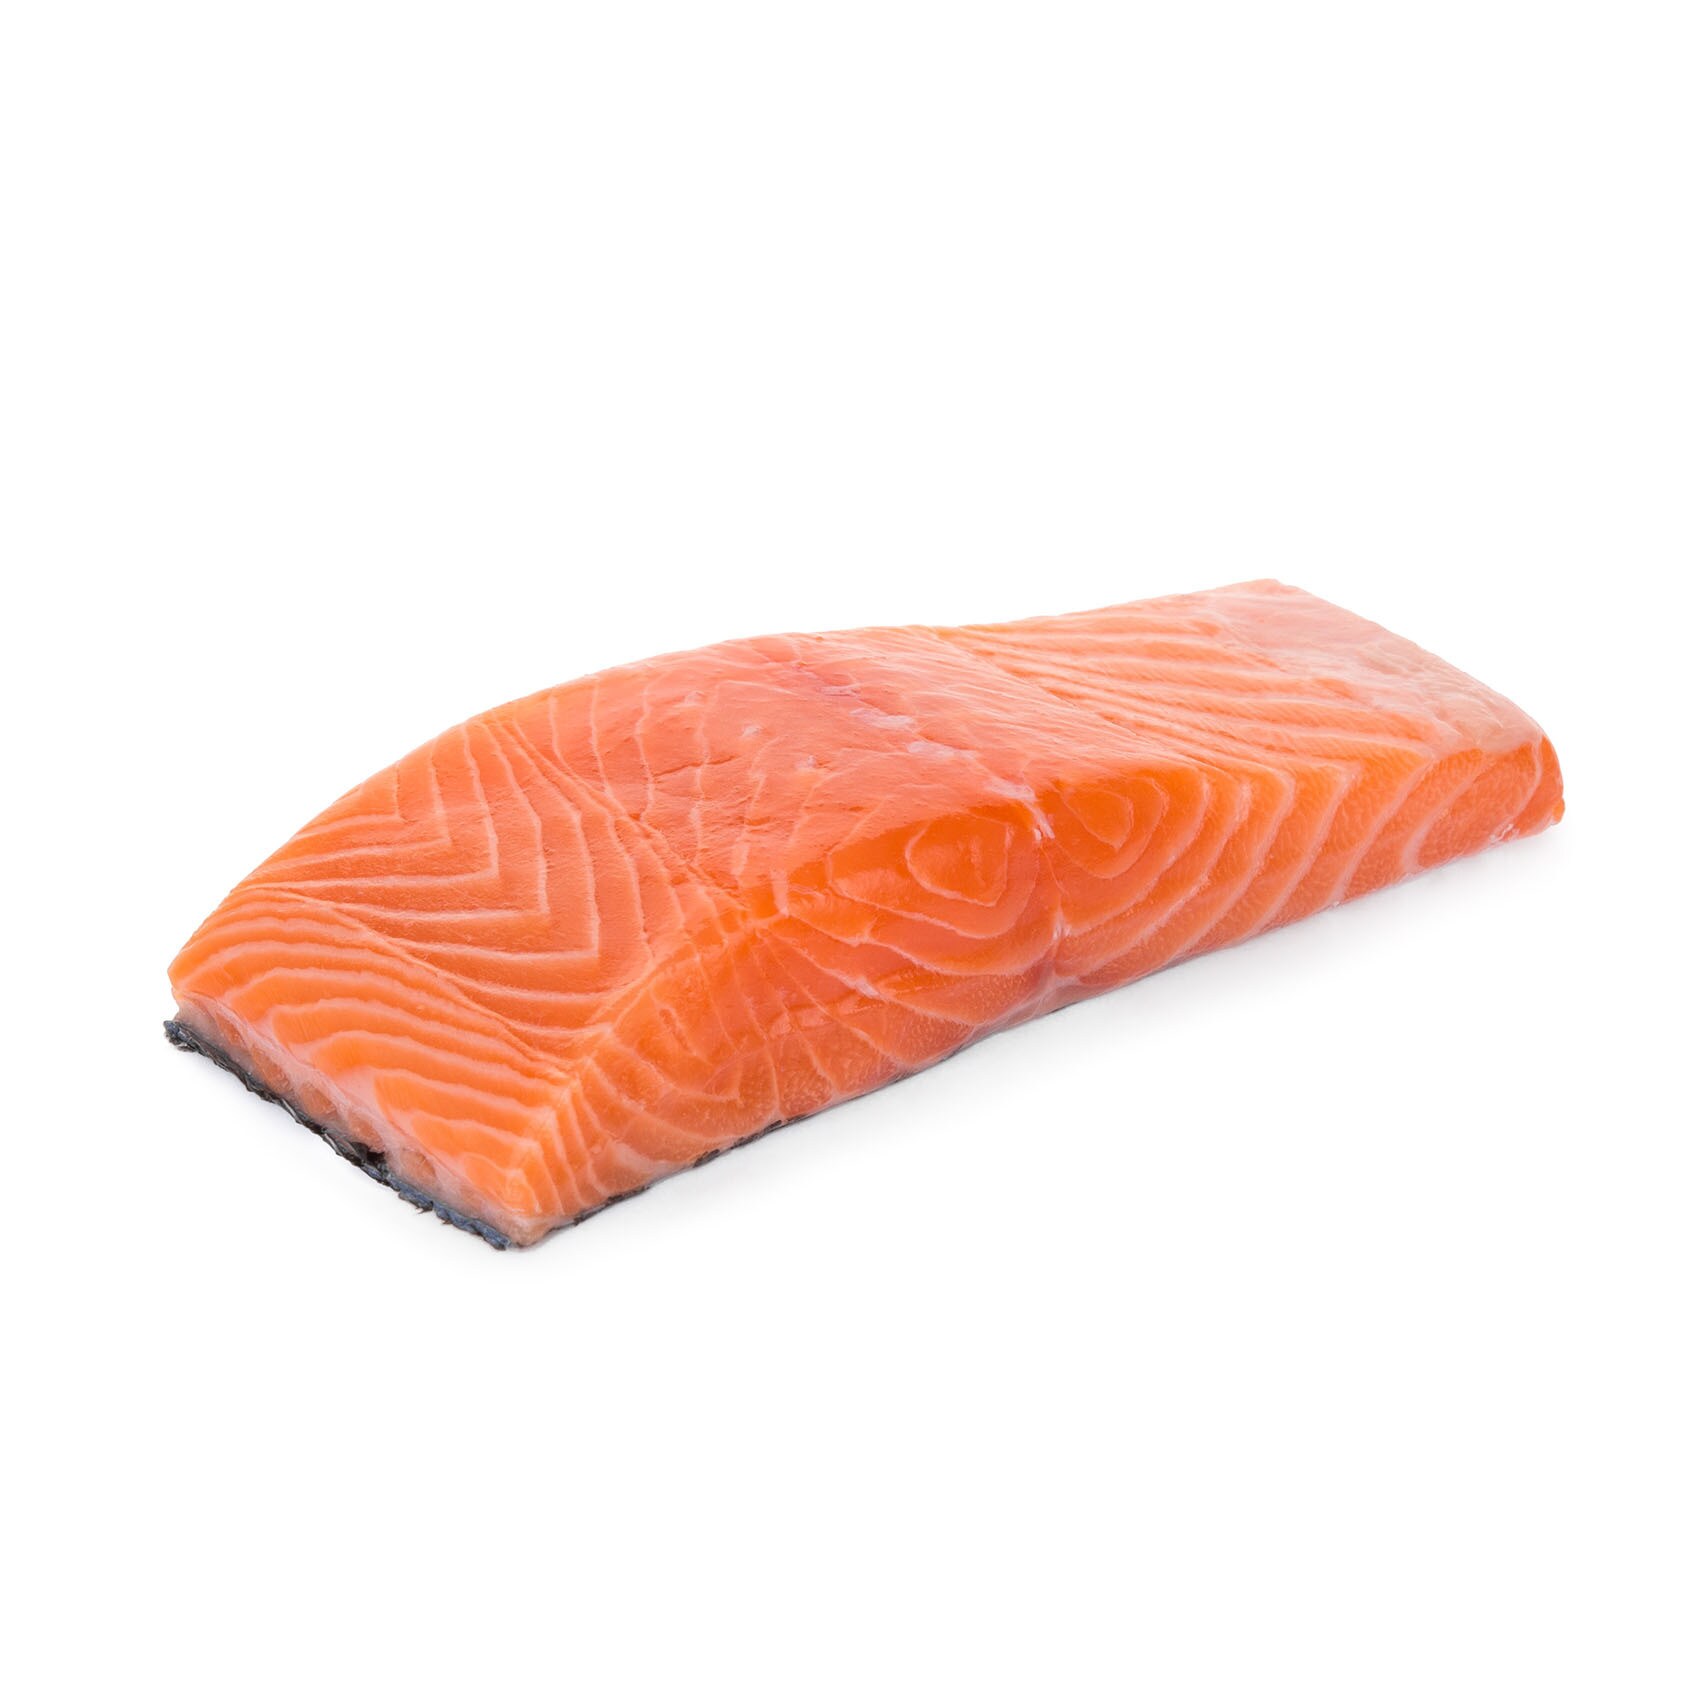 Buy Fresh Salmon Fish Fillet